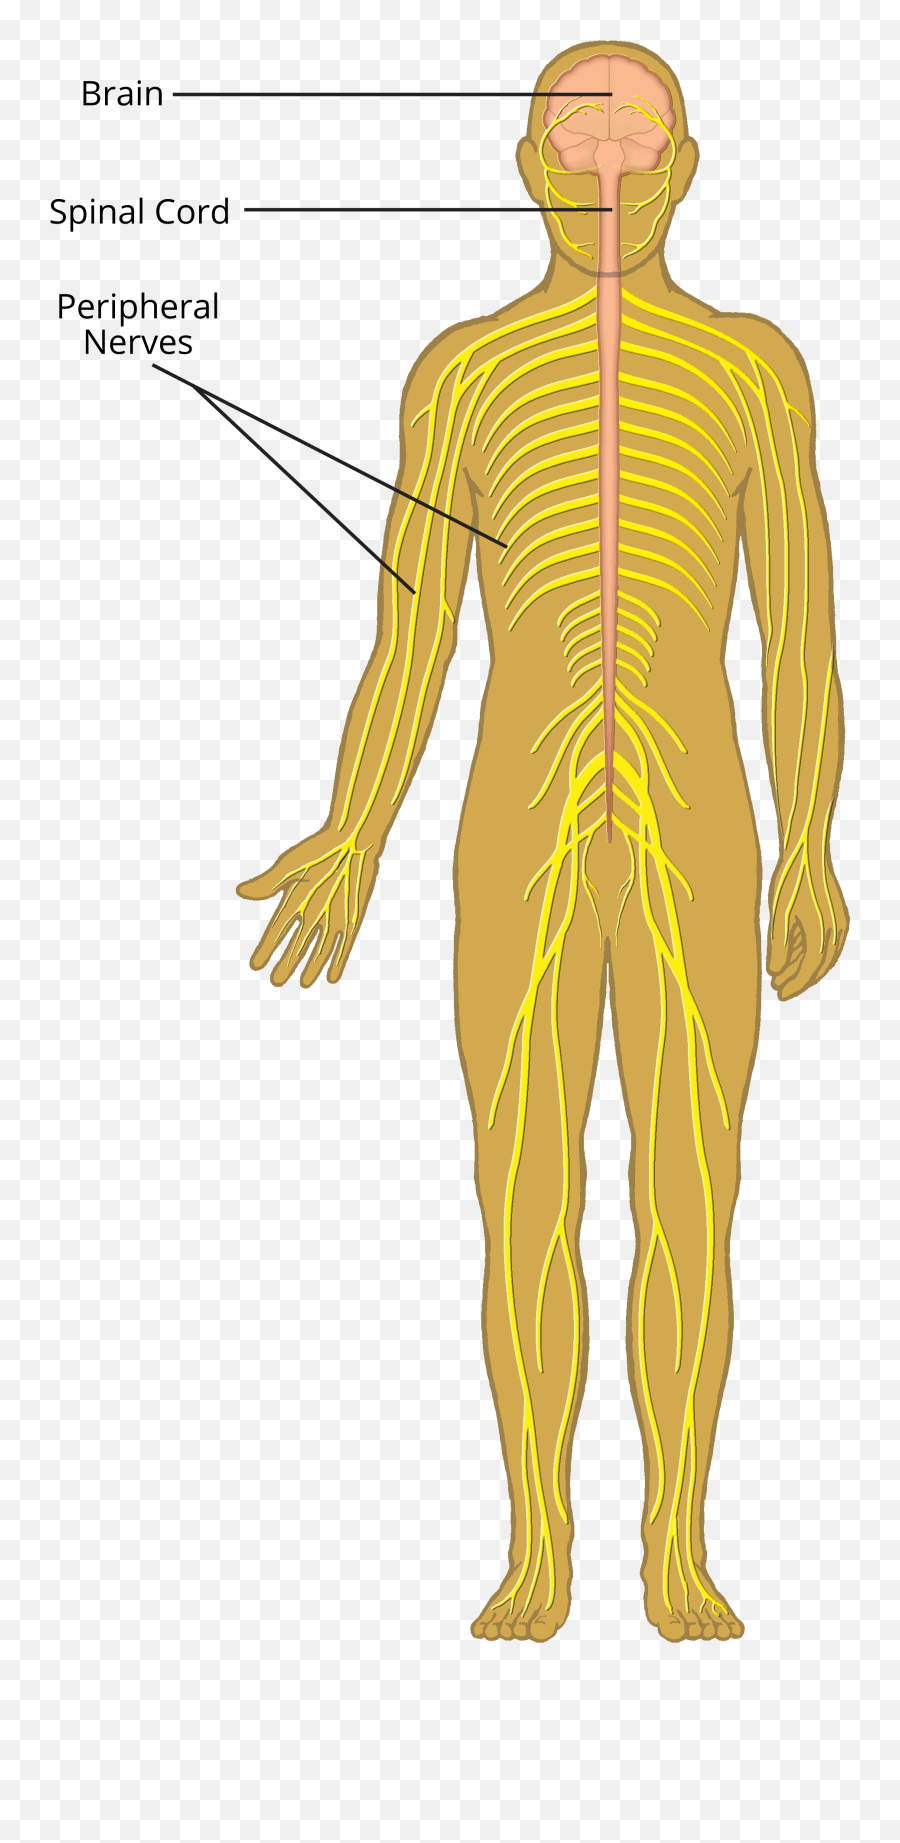 Central Nervous System Transparent - Download A Picture Of Nervous System With Labels Png,Nervous System Png